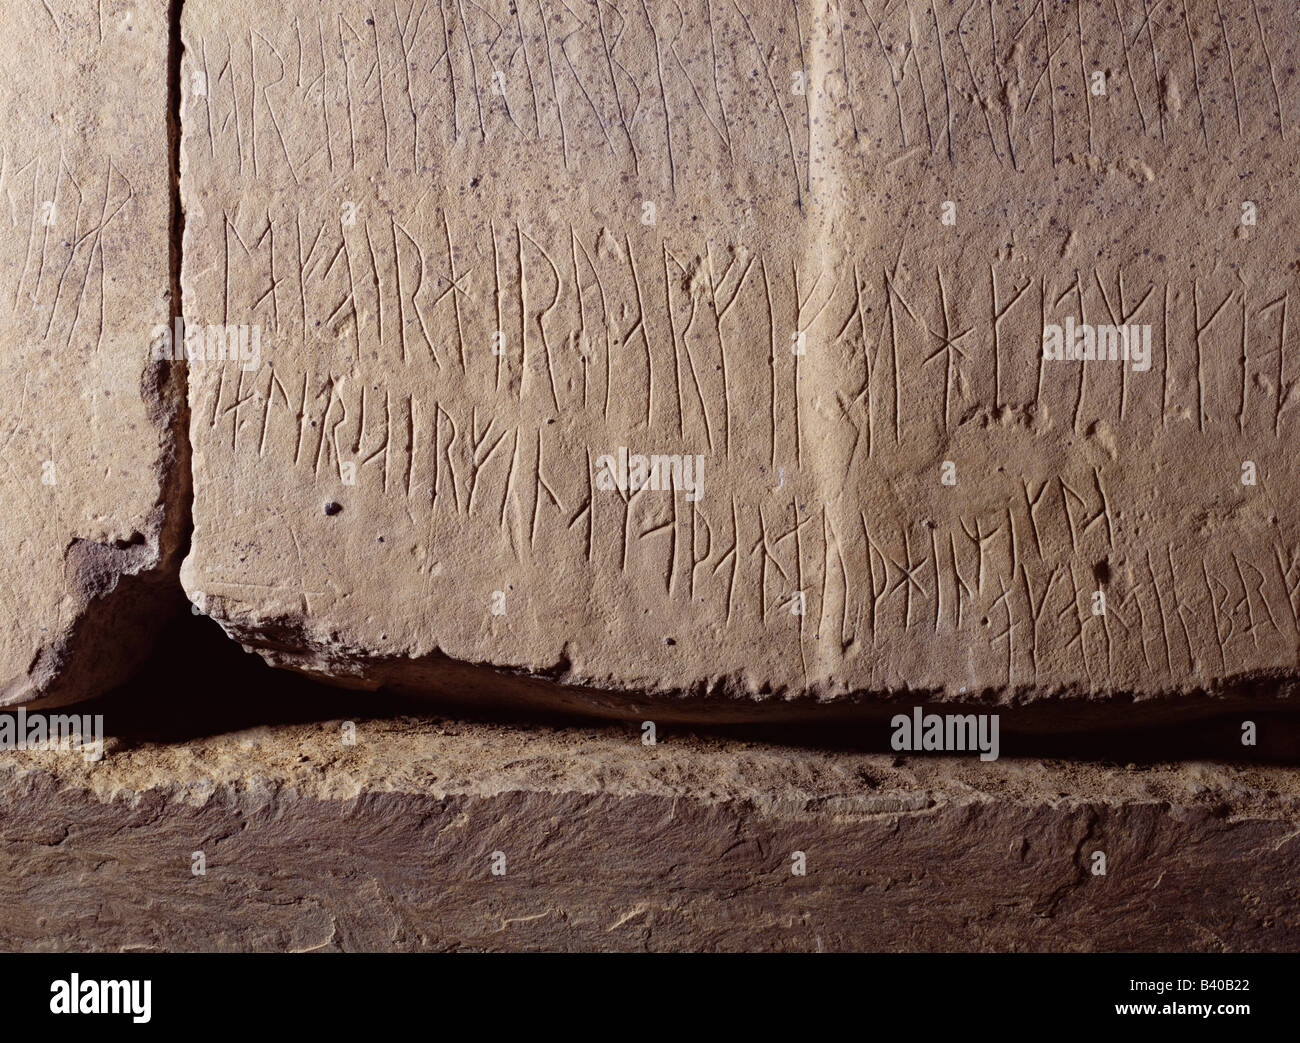 dh Neolithische Grabkammer MAESHOWE ORKNEY ISLES Norseman Viking rune auf Steinwand Runen Graffiti norse Schnitzrunen Stockfoto